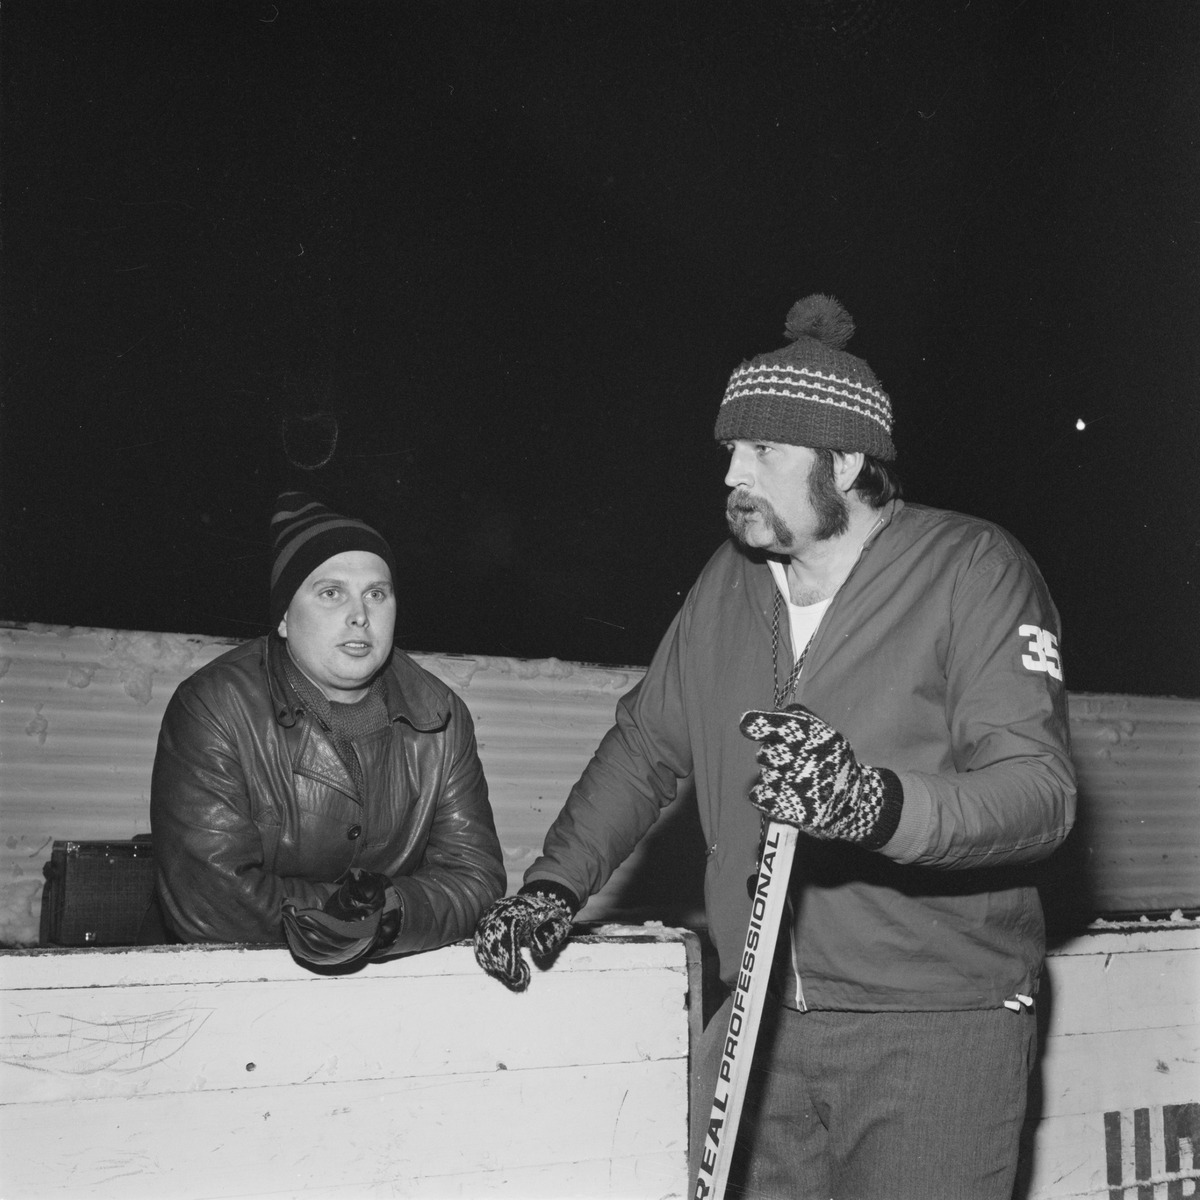 Ishockeytränare i Tierp, Uppland, februari 1972